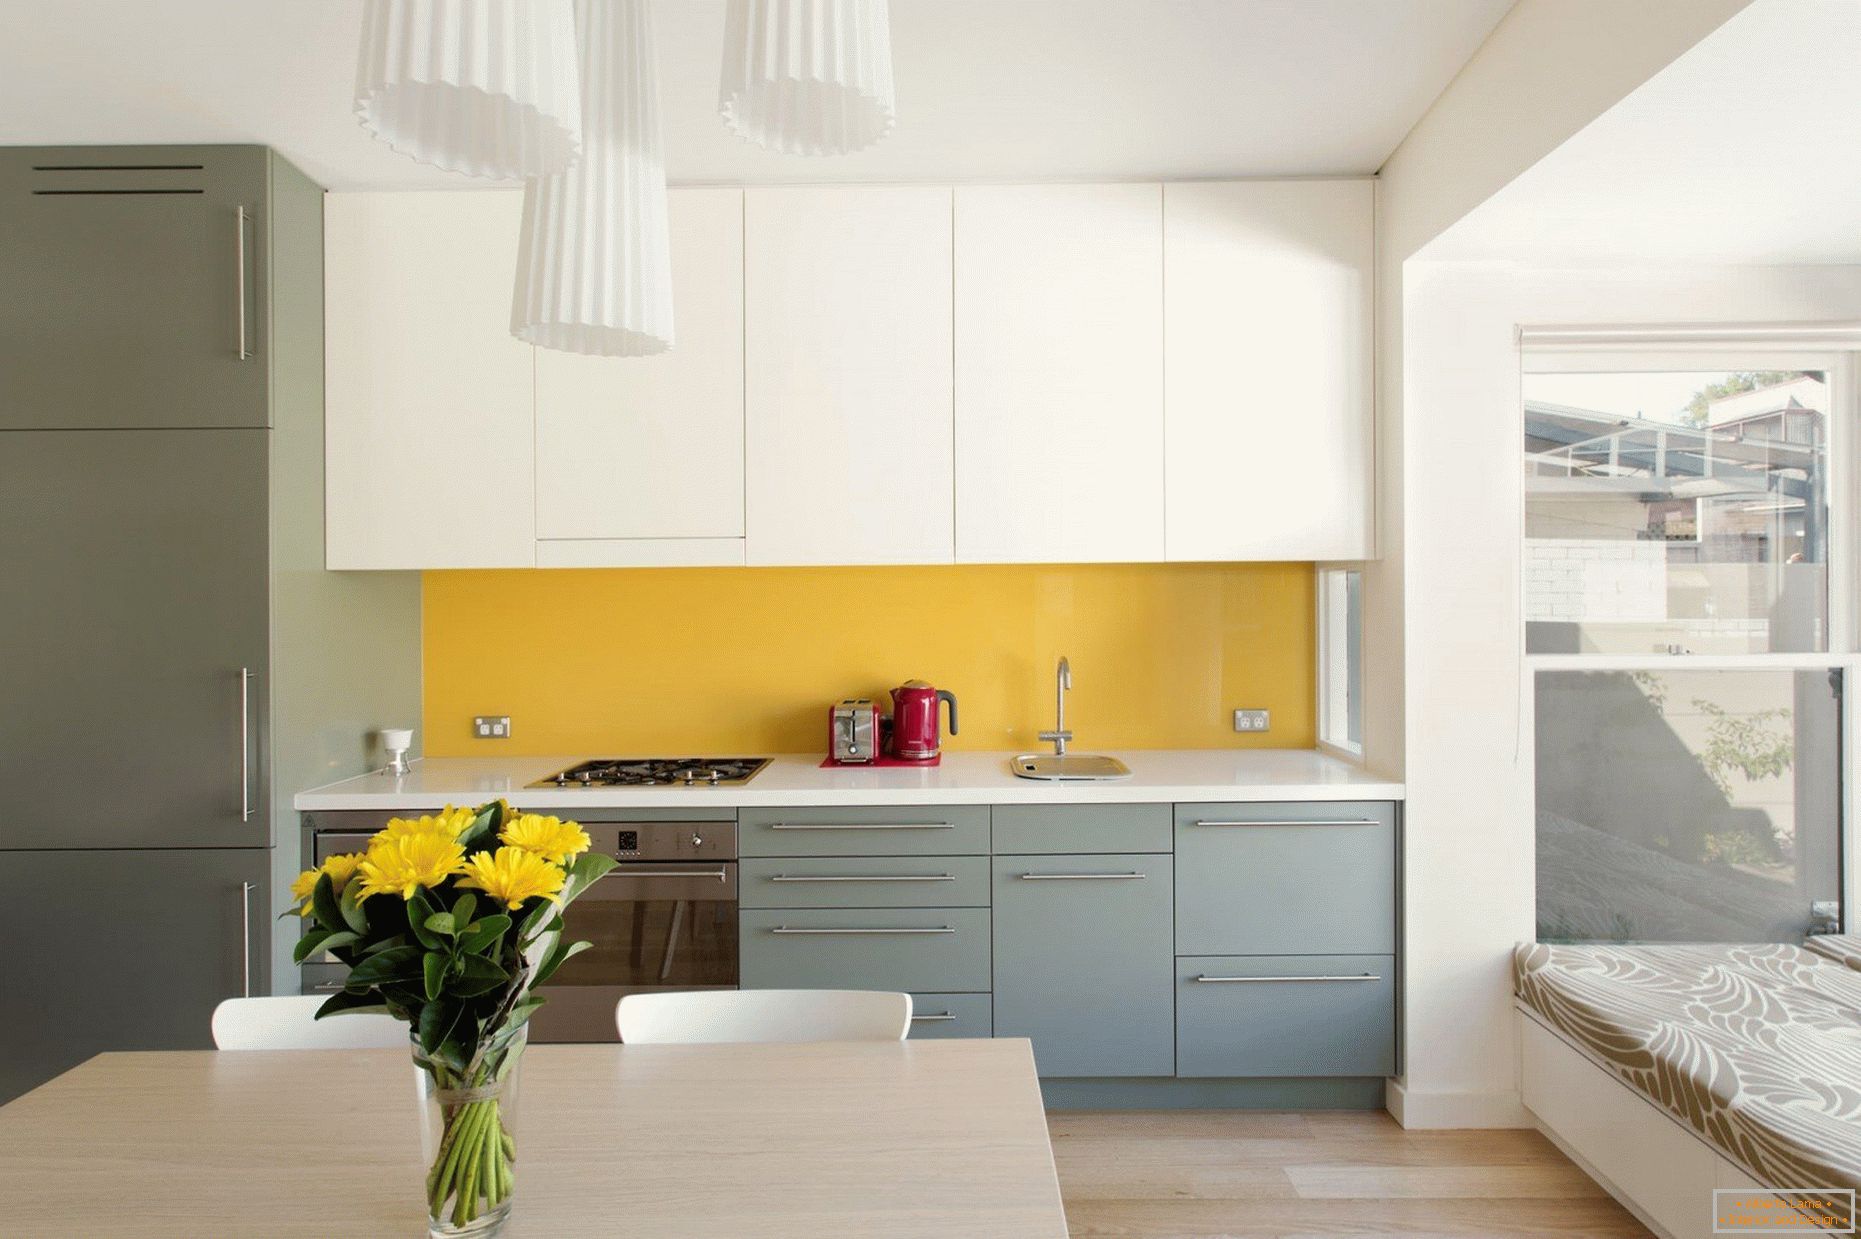 Grembiule giallo in cucina bianca e grigia